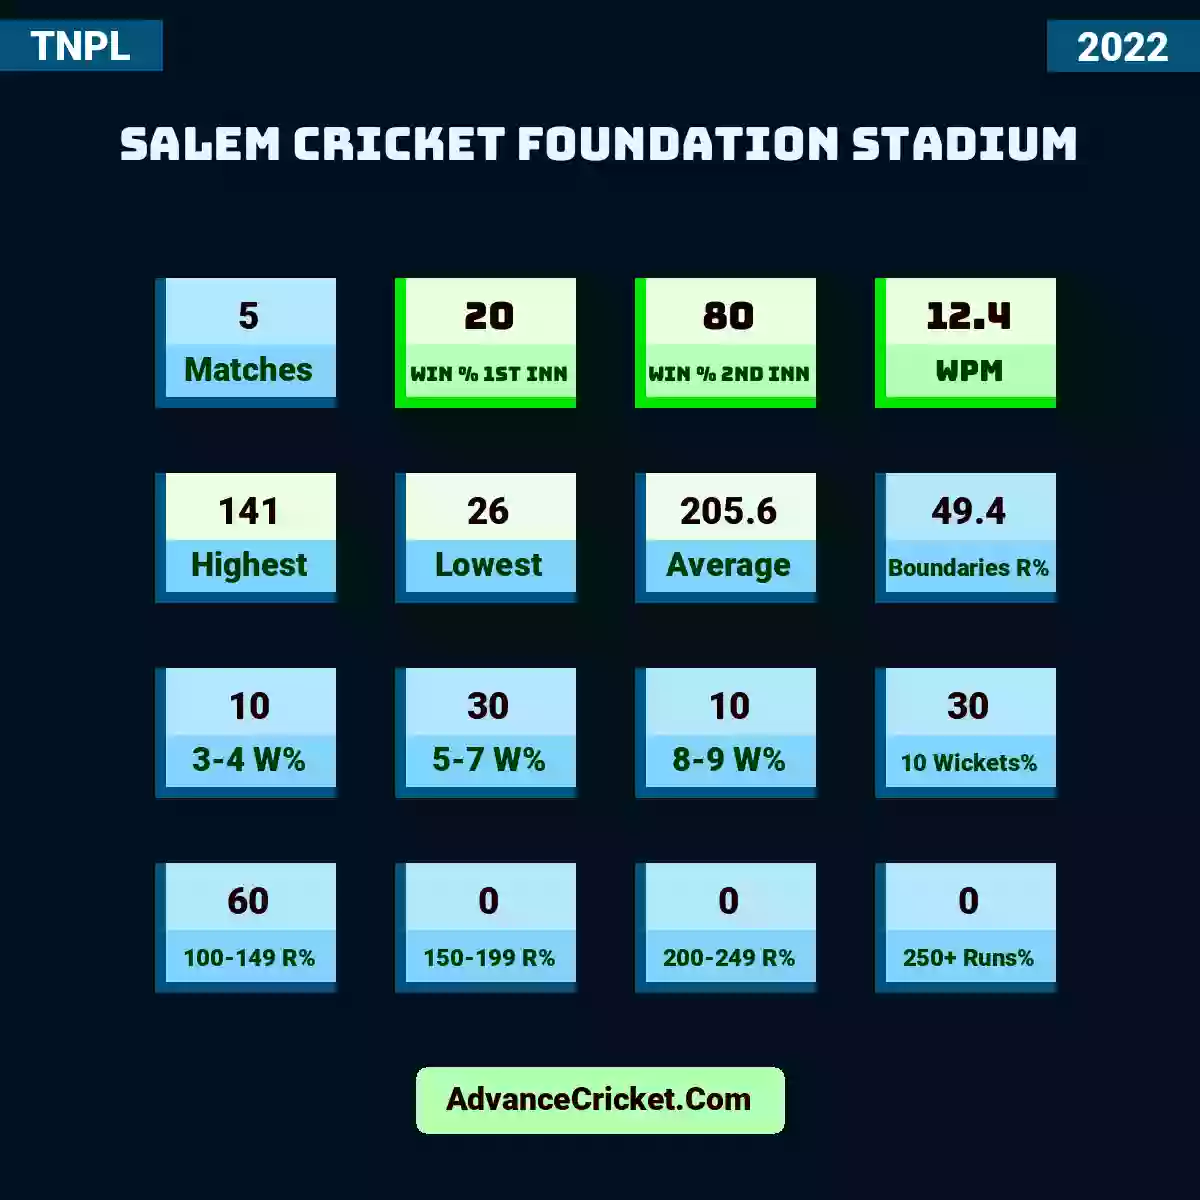 Image showing Salem Cricket Foundation Stadium with Matches: 5, Win % 1st Inn: 20, Win % 2nd Inn: 80, WPM: 12.4, Highest: 141, Lowest: 26, Average: 205.6, Boundaries R%: 49.4, 3-4 W%: 10, 5-7 W%: 30, 8-9 W%: 10, 10 Wickets%: 30, 100-149 R%: 60, 150-199 R%: 0, 200-249 R%: 0, 250+ Runs%: 0.